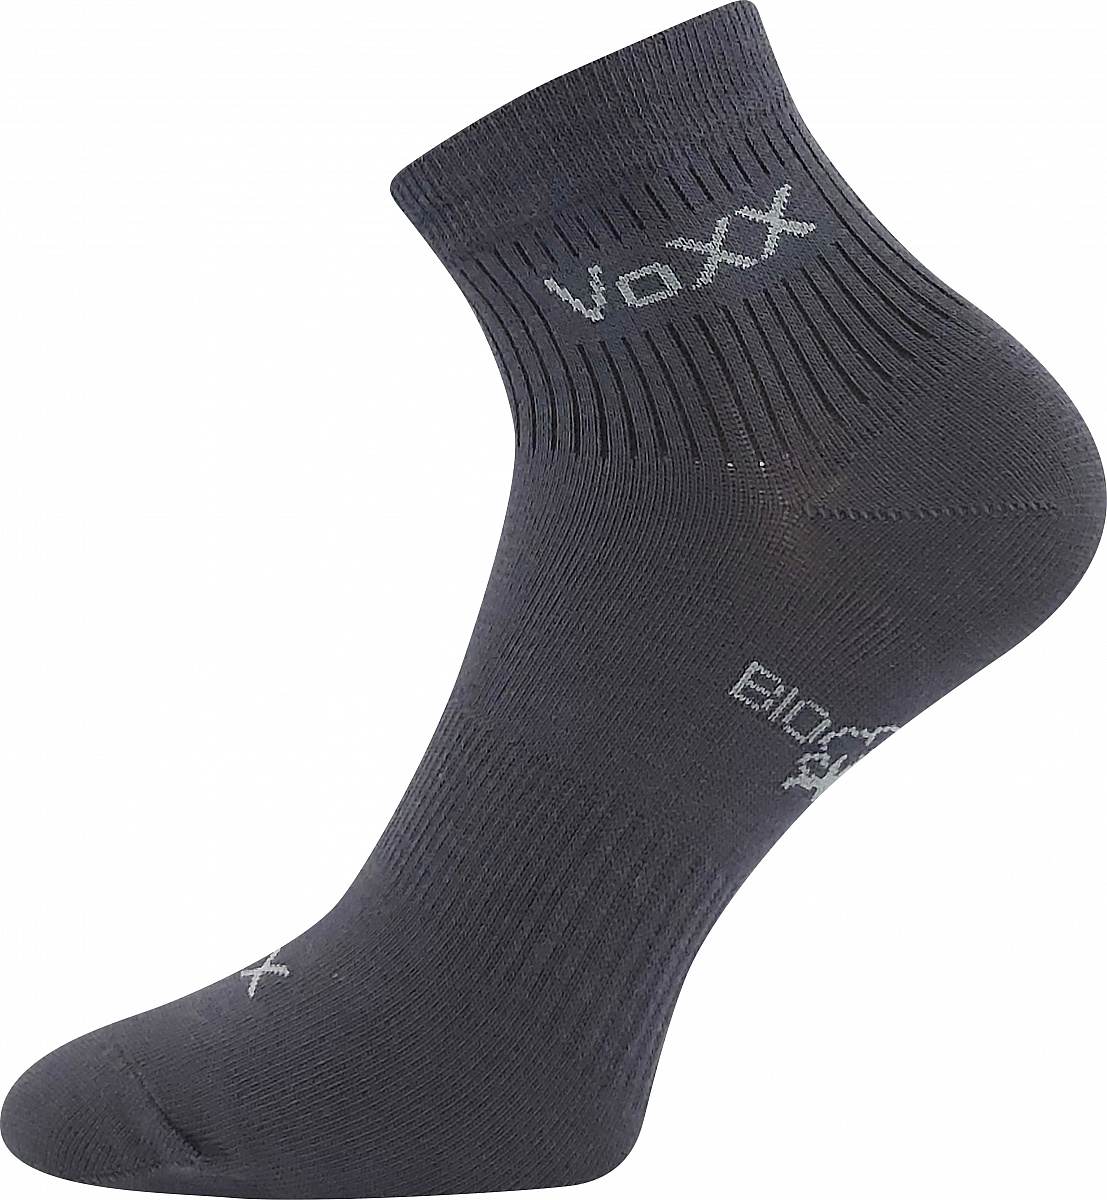 Ponožky VoXX - Boby, tmavě šedá Barva: Šedá, Velikost: 35-38